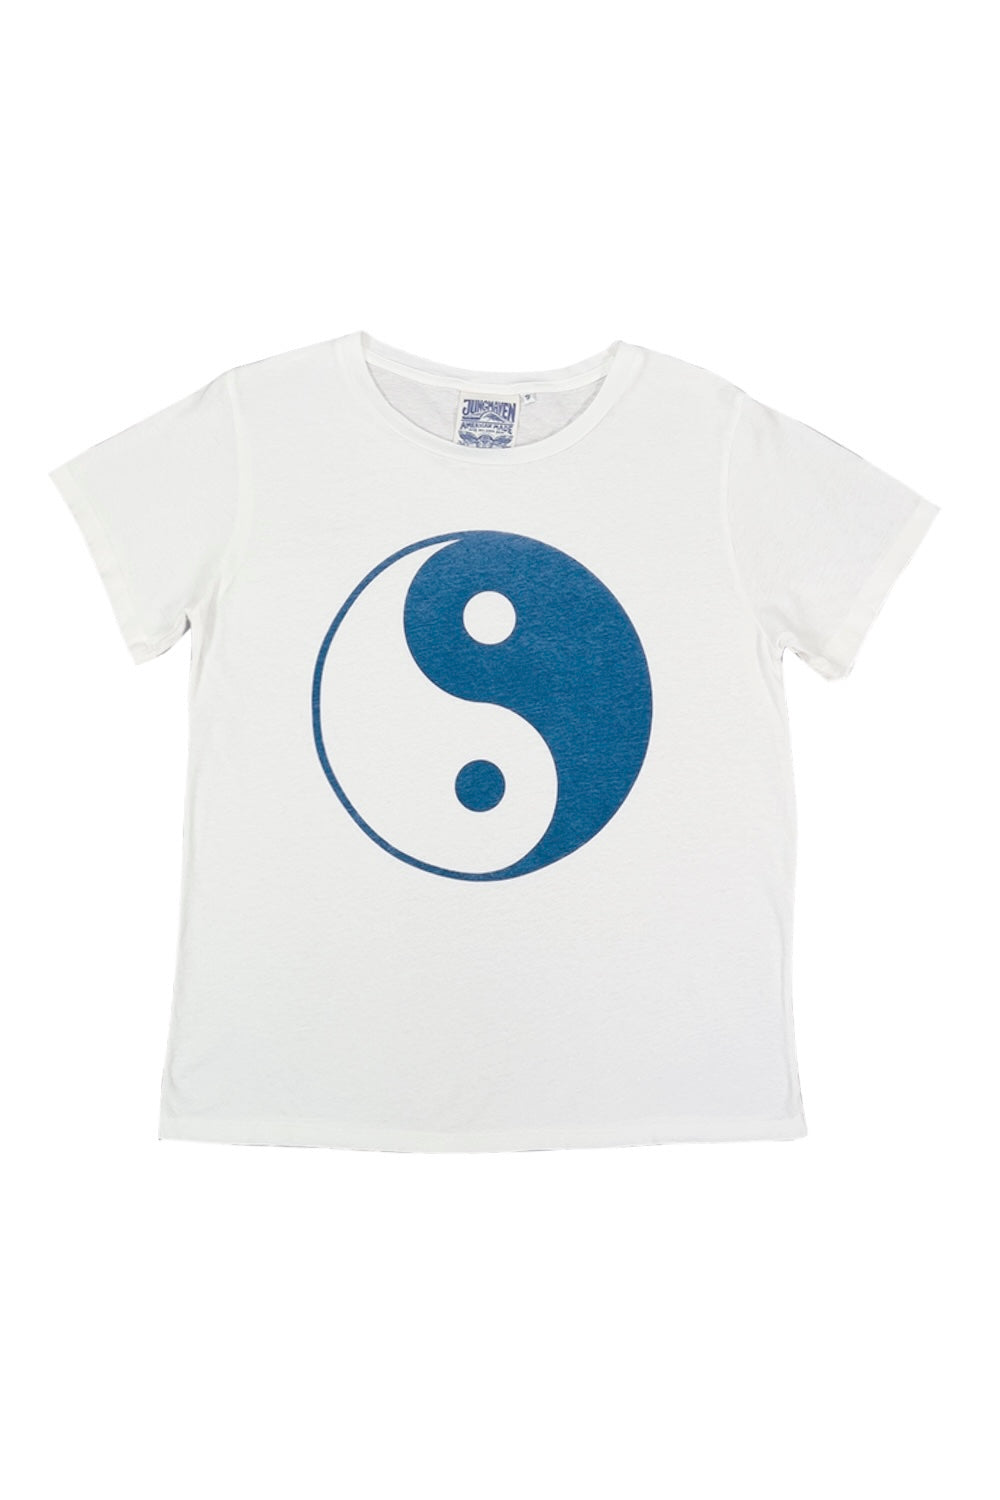 Yin Yang Ojai Tee | Jungmaven Hemp Clothing & Accessories / Color: Galaxy Blue